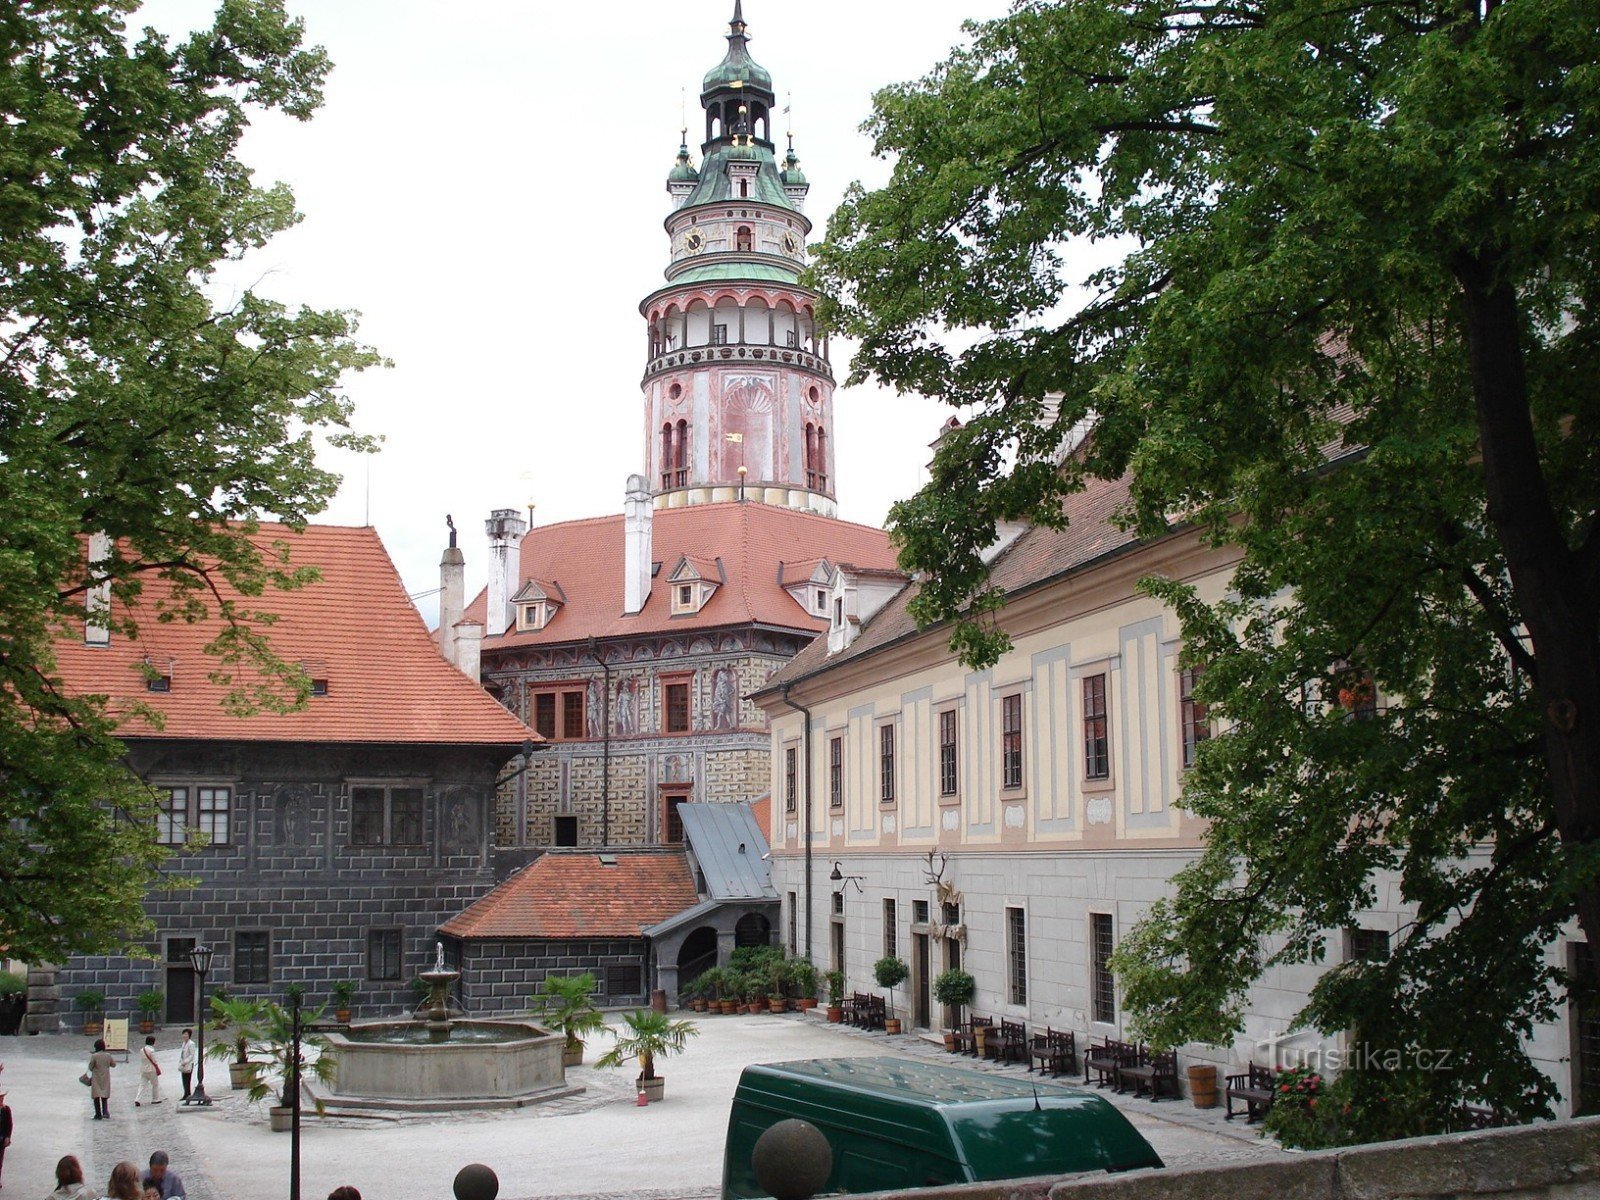 Grad Český Krumlov